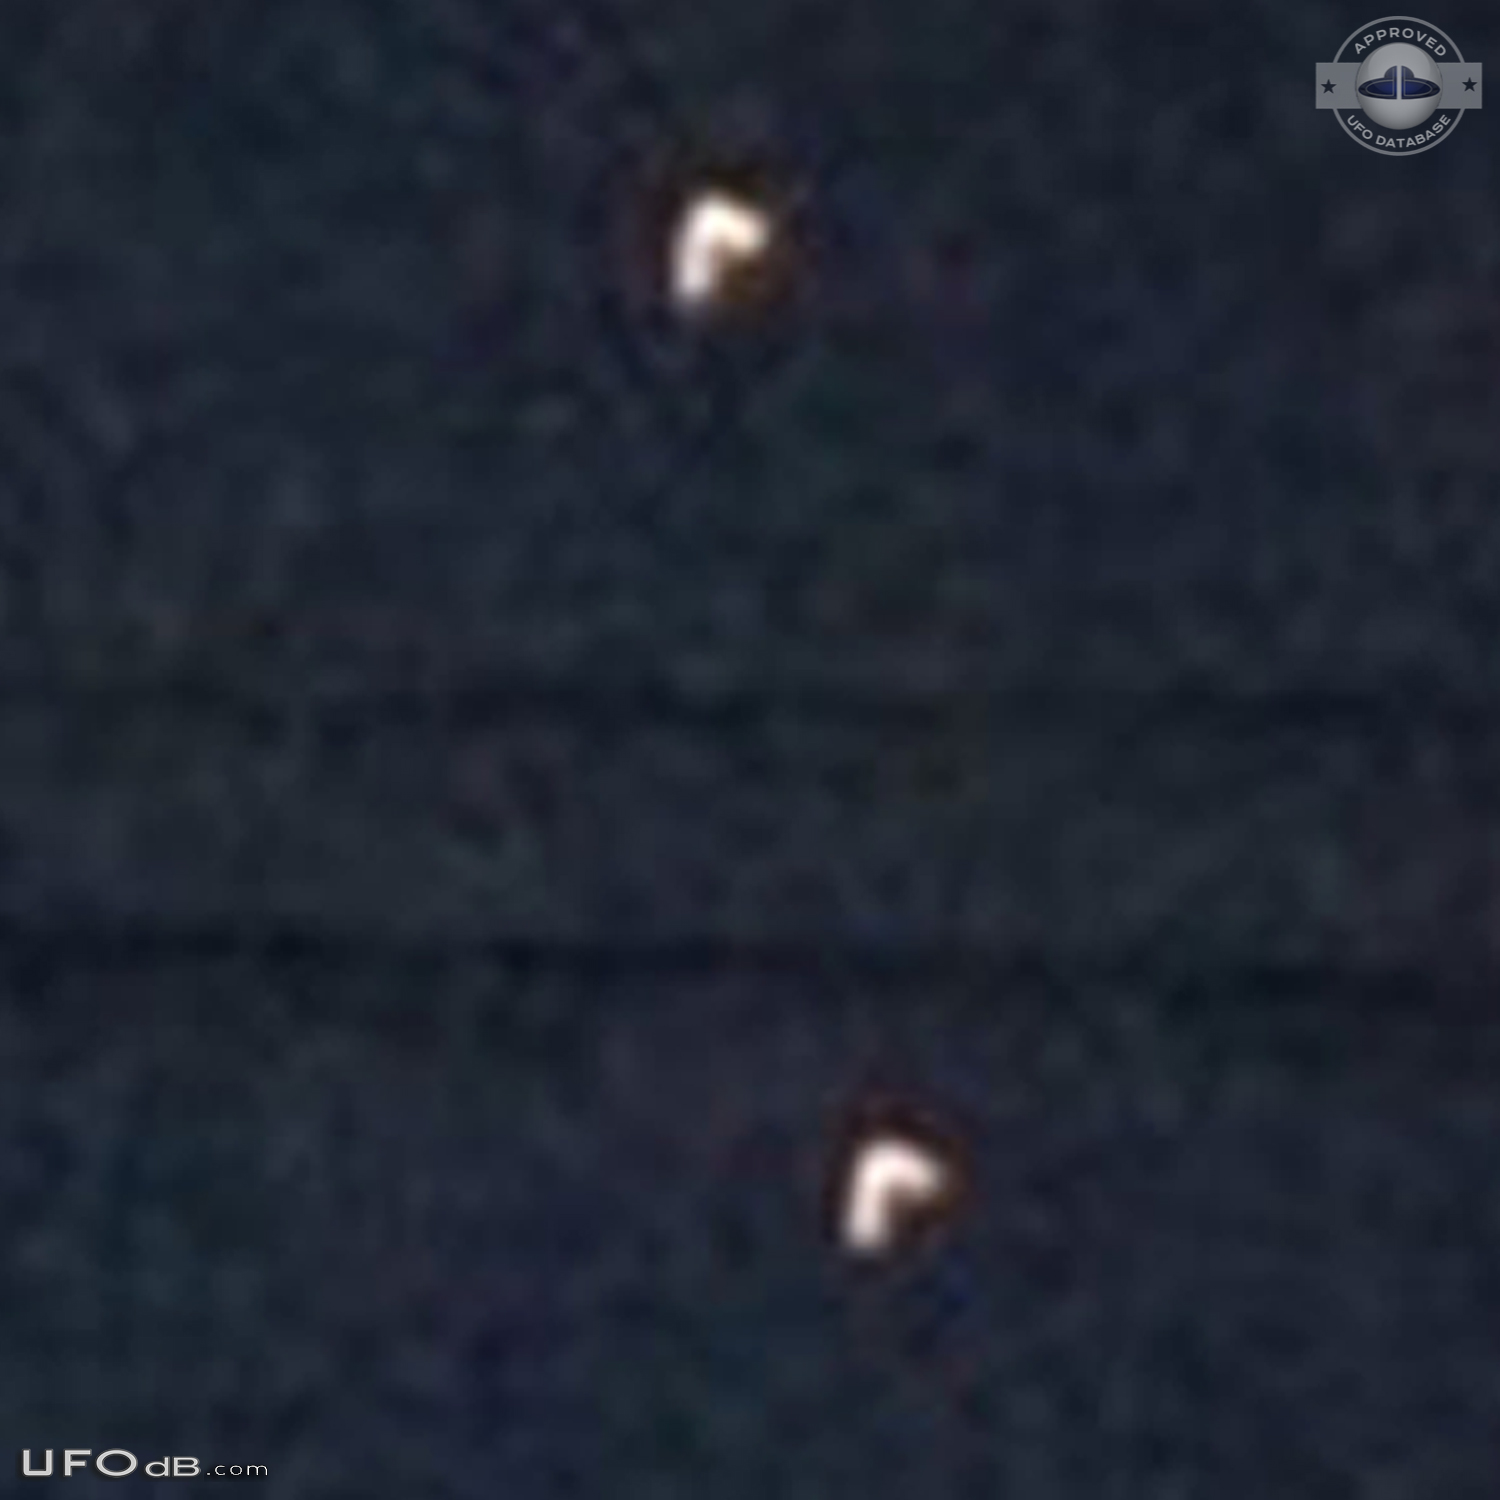 Triangle formation Orange UFOs over Grover beach, California USA 2014 UFO Picture #652-6